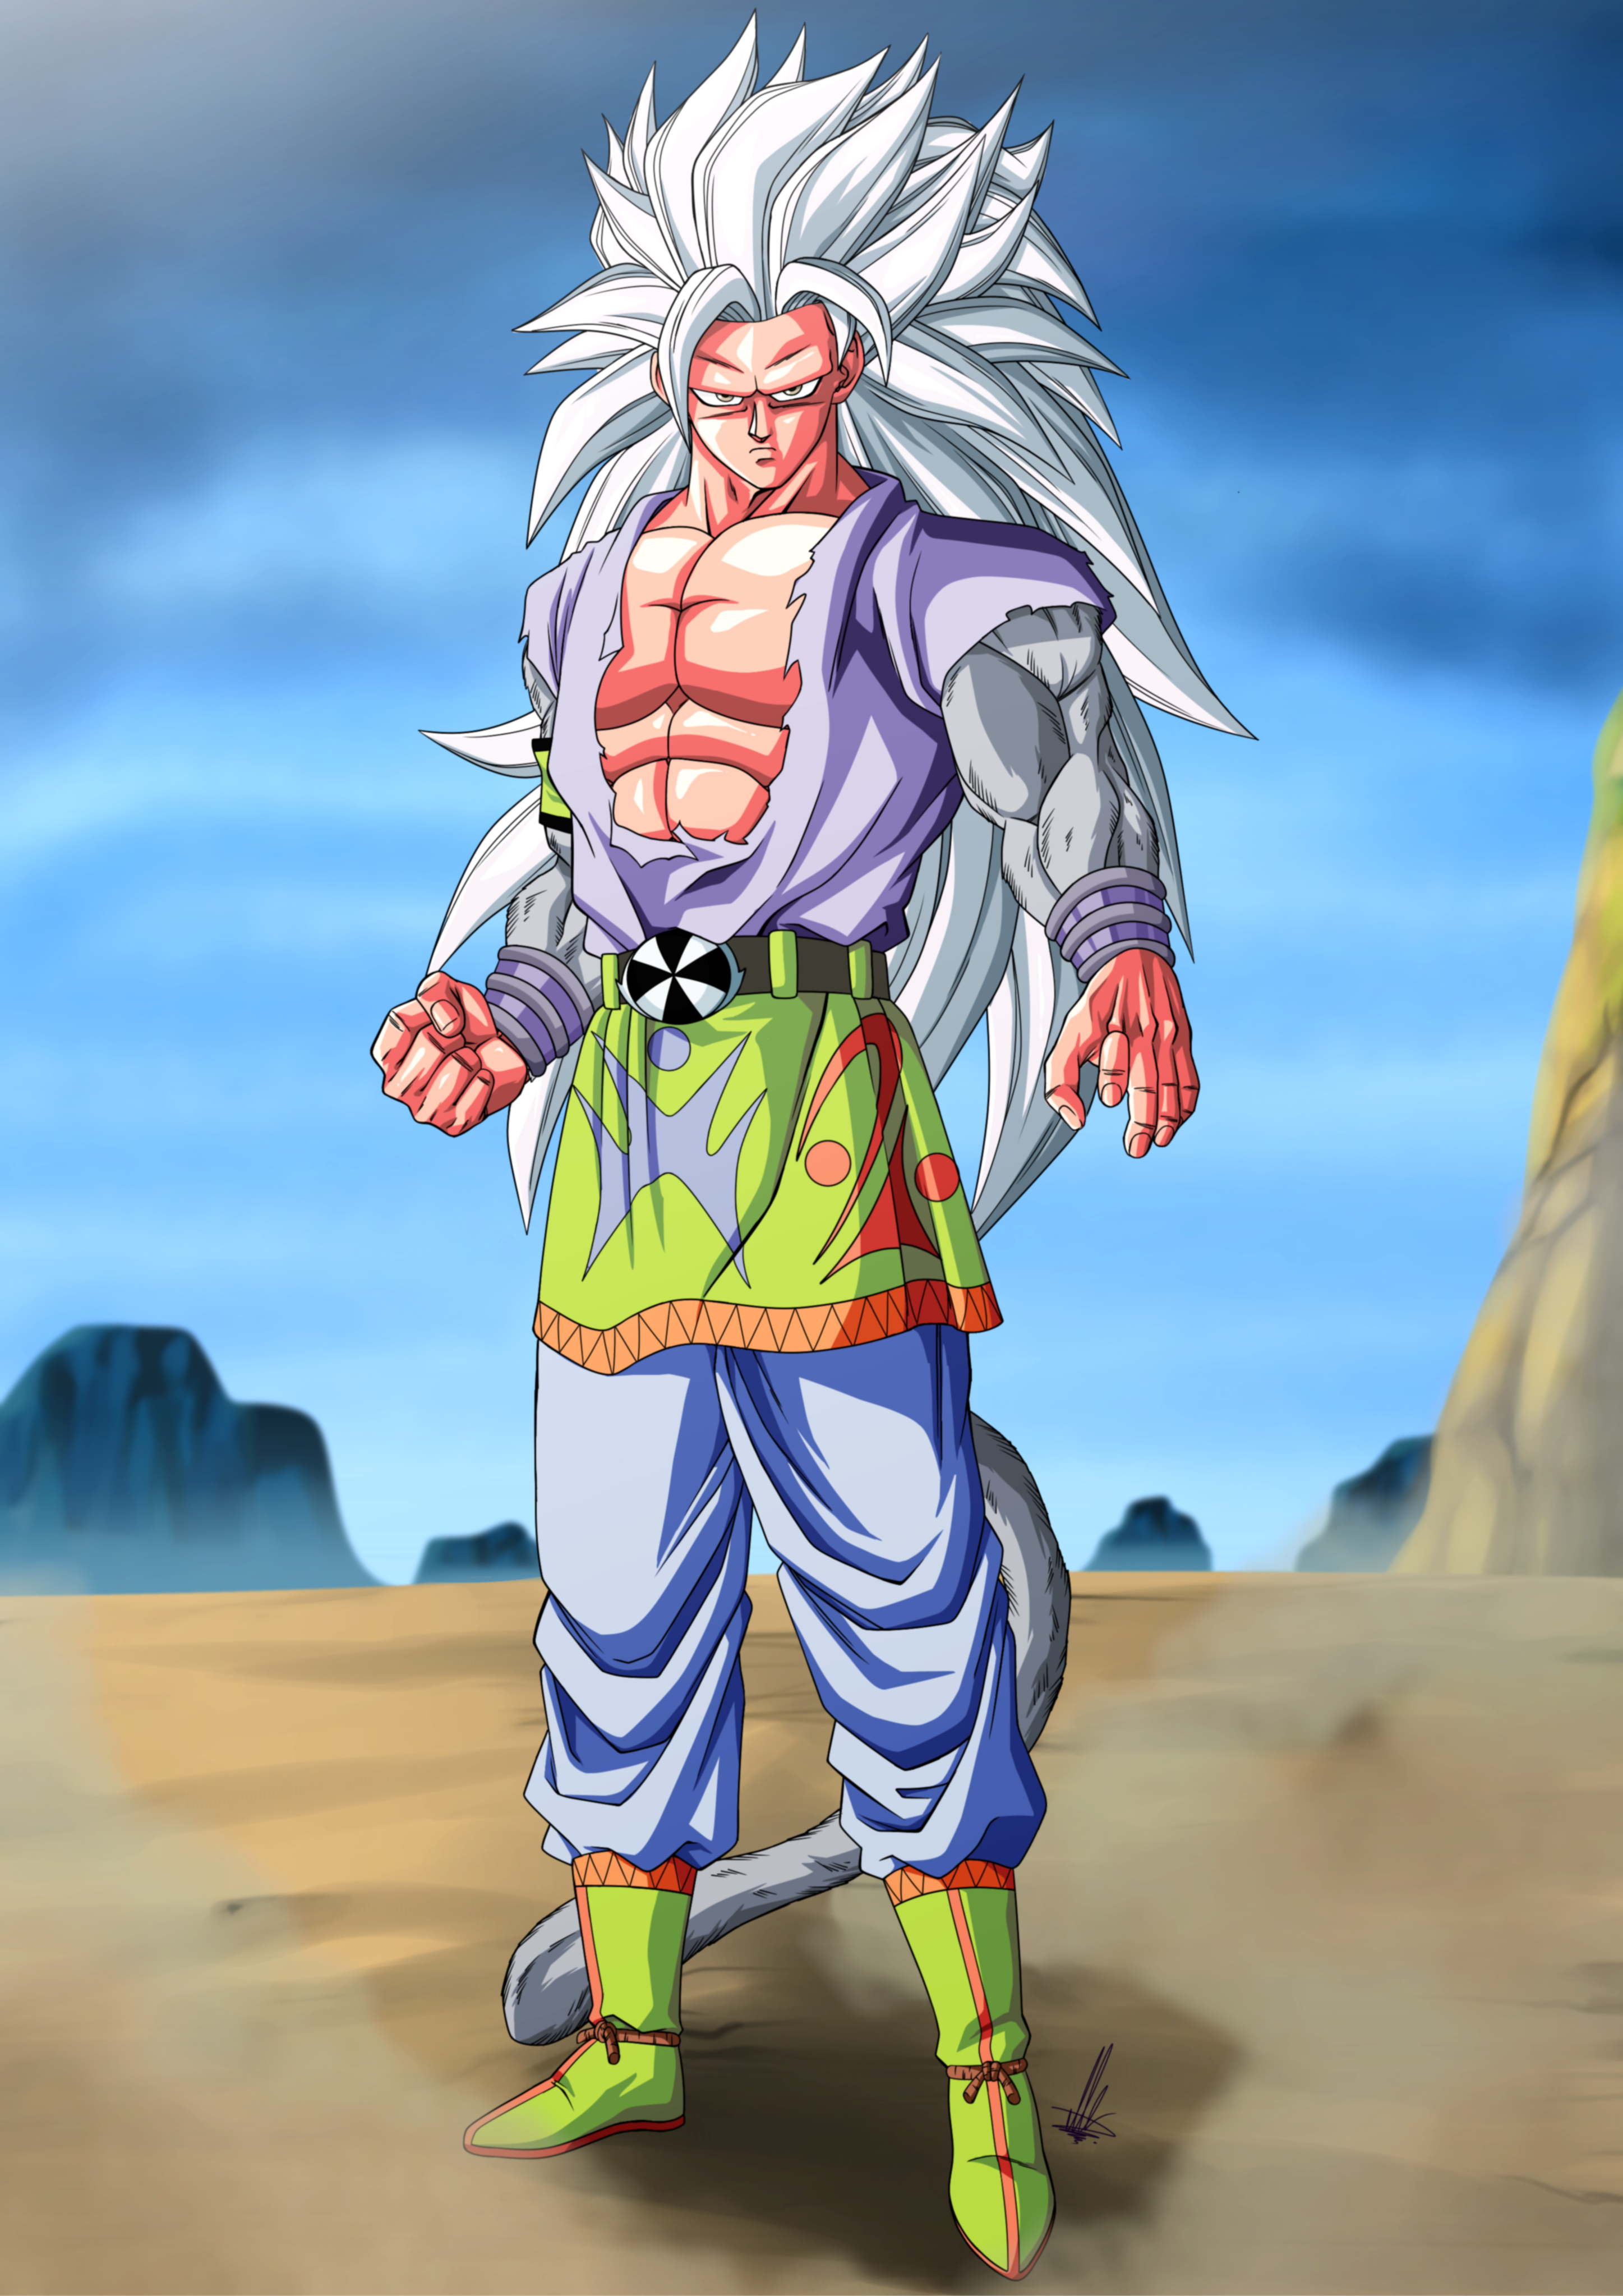 Goku ssj5 by Unkoshin on DeviantArt